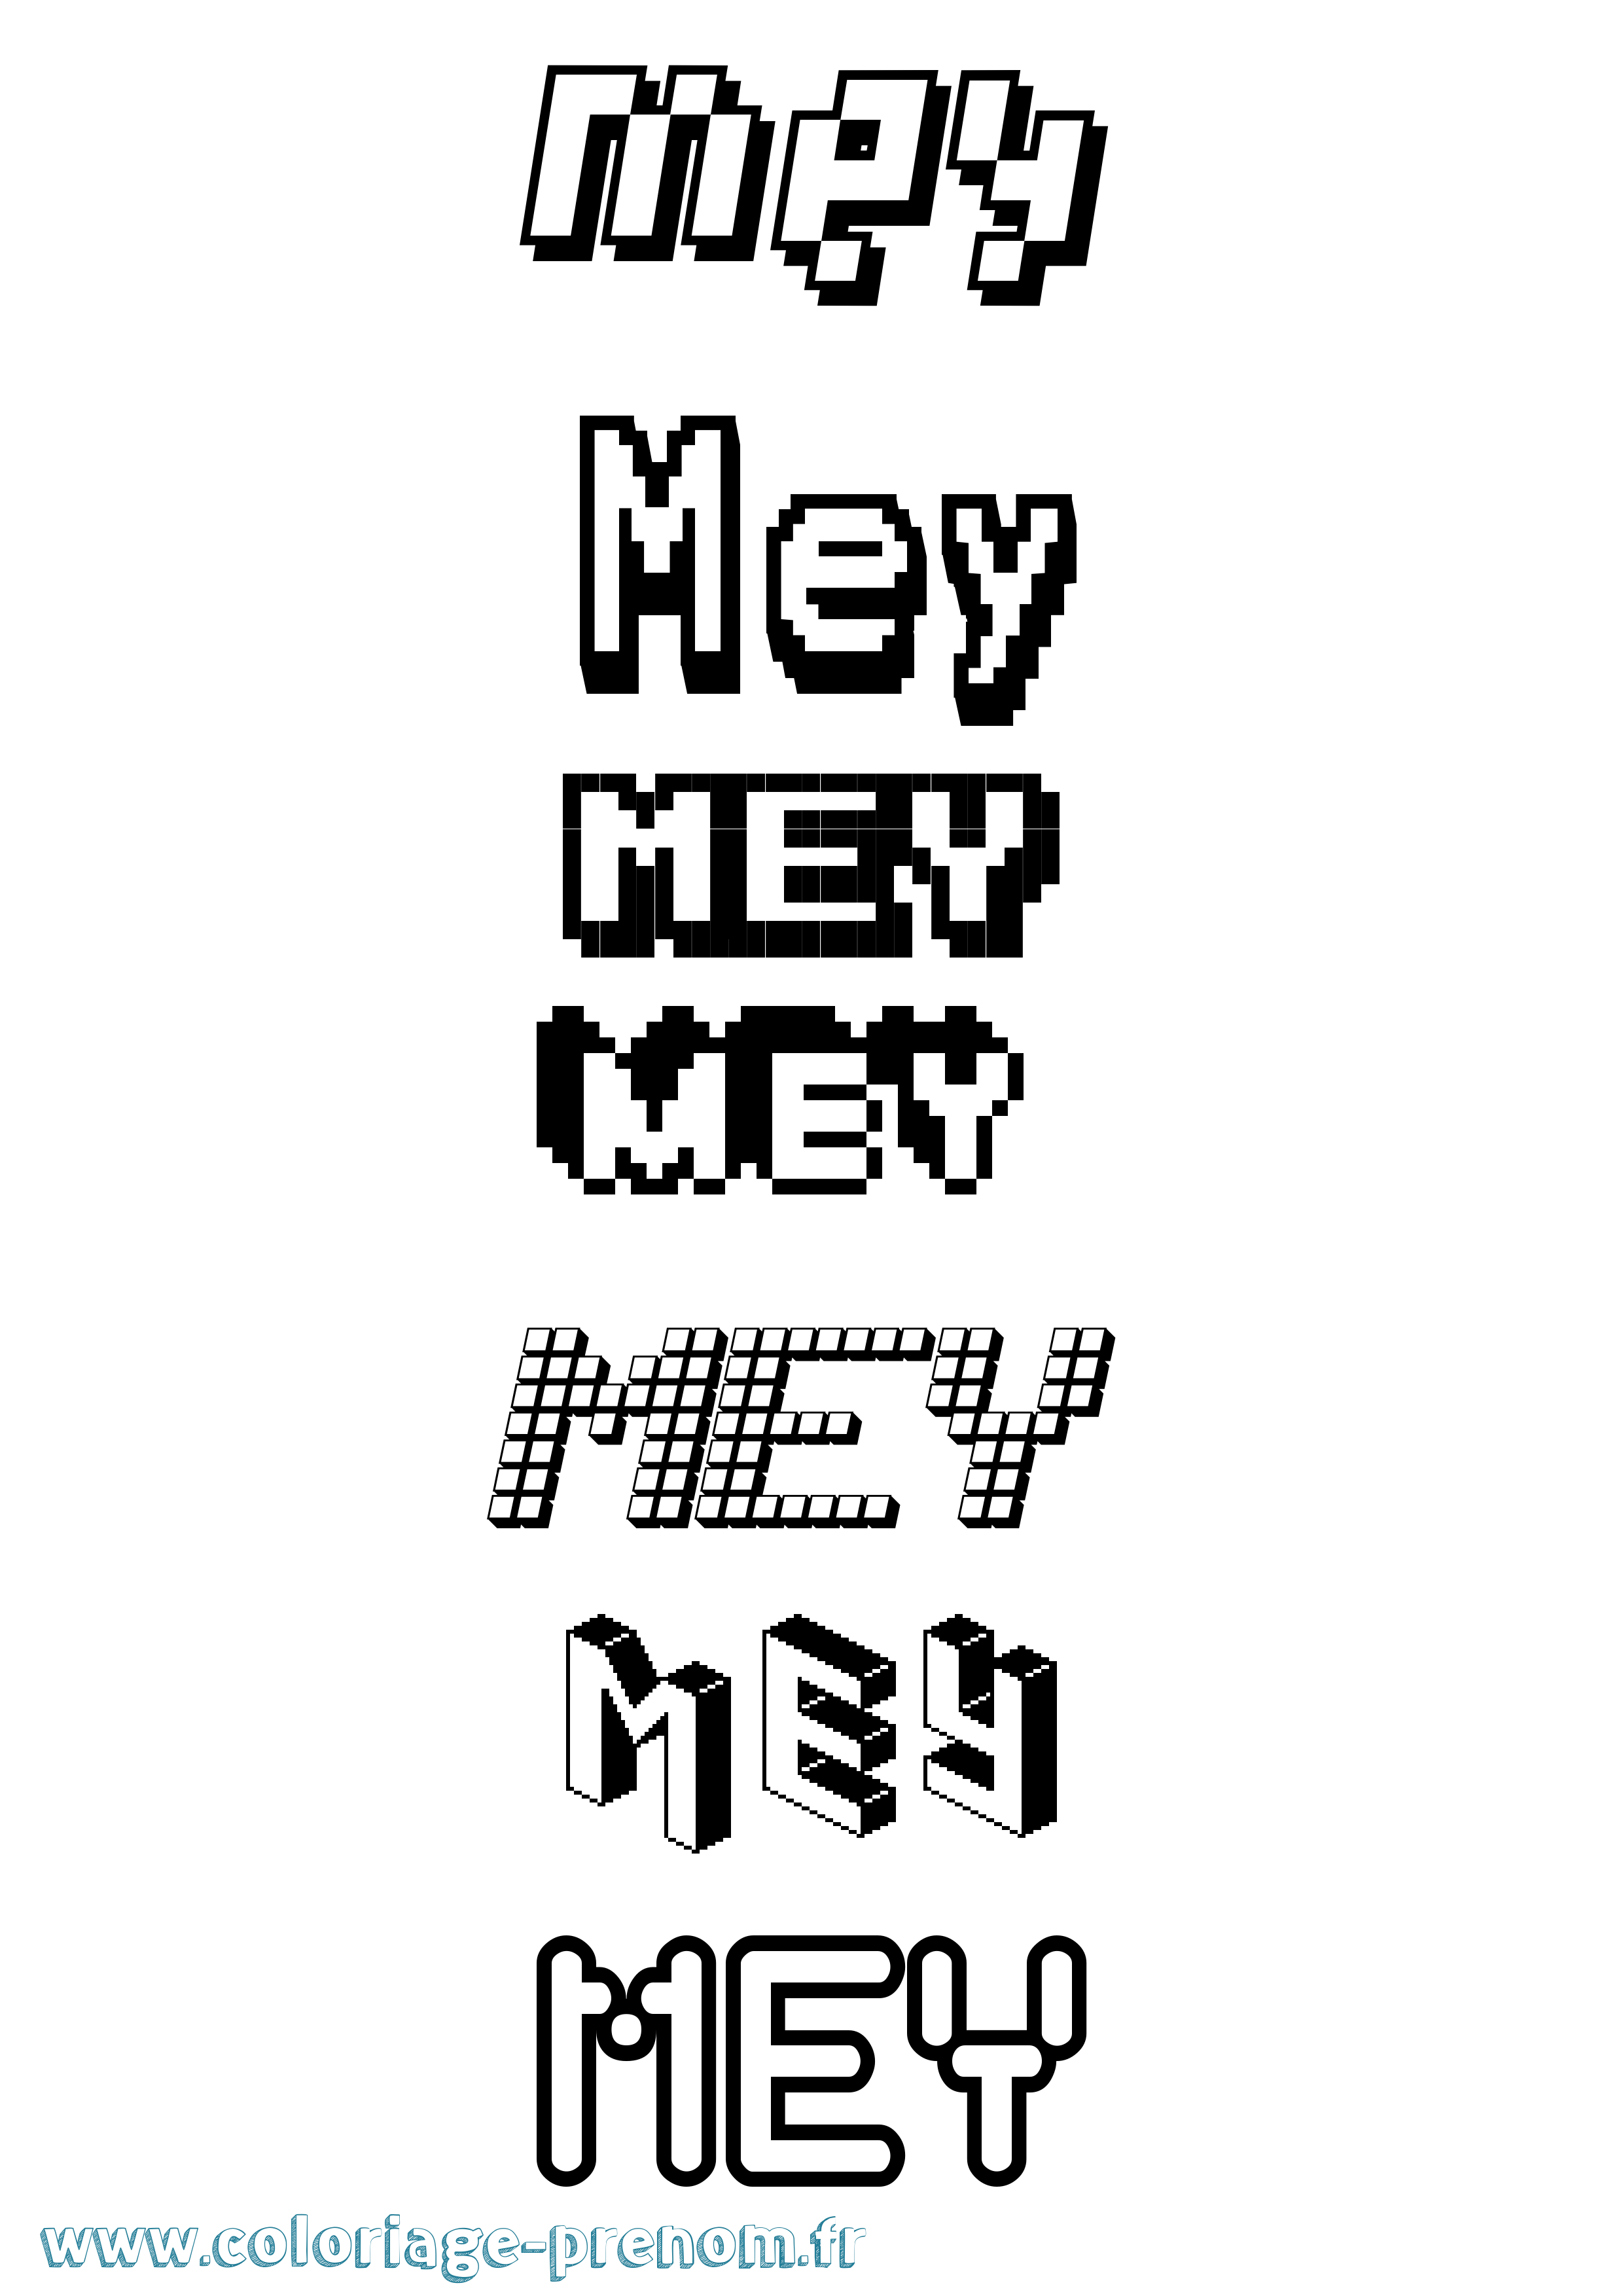 Coloriage prénom Mey Pixel